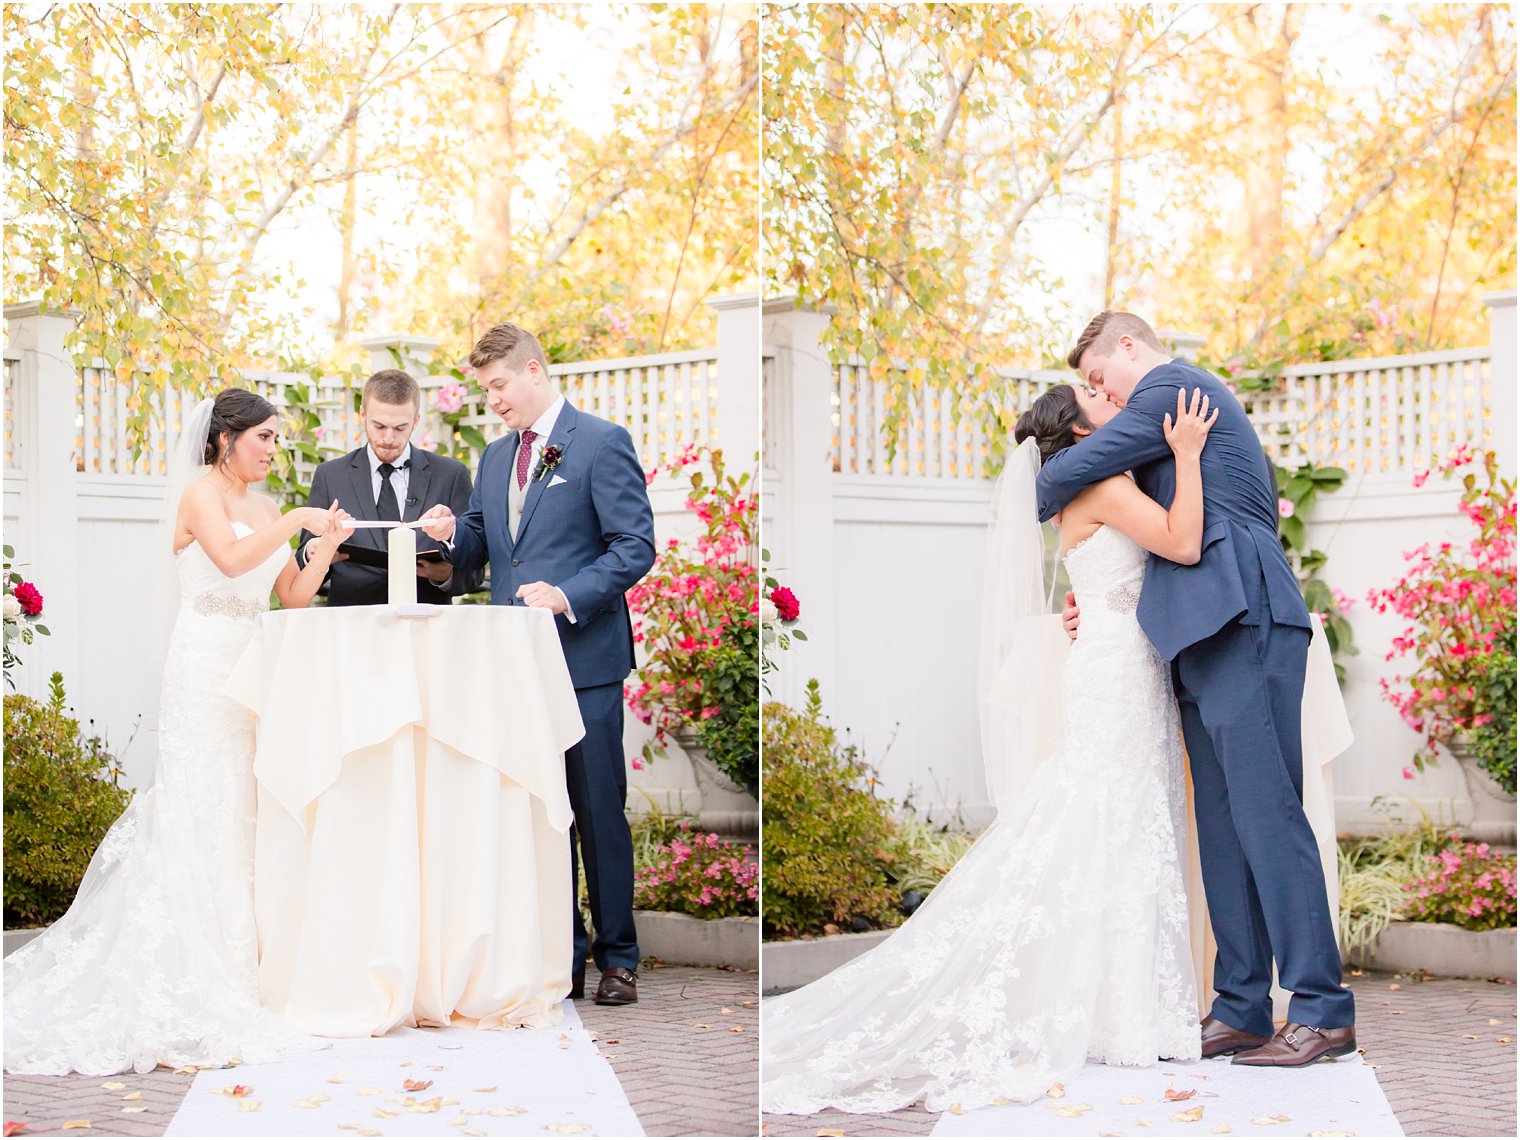 Wedding ceremony at Meadow Wood Manor | Photos by NJ Wedding Photographers Idalia Photography